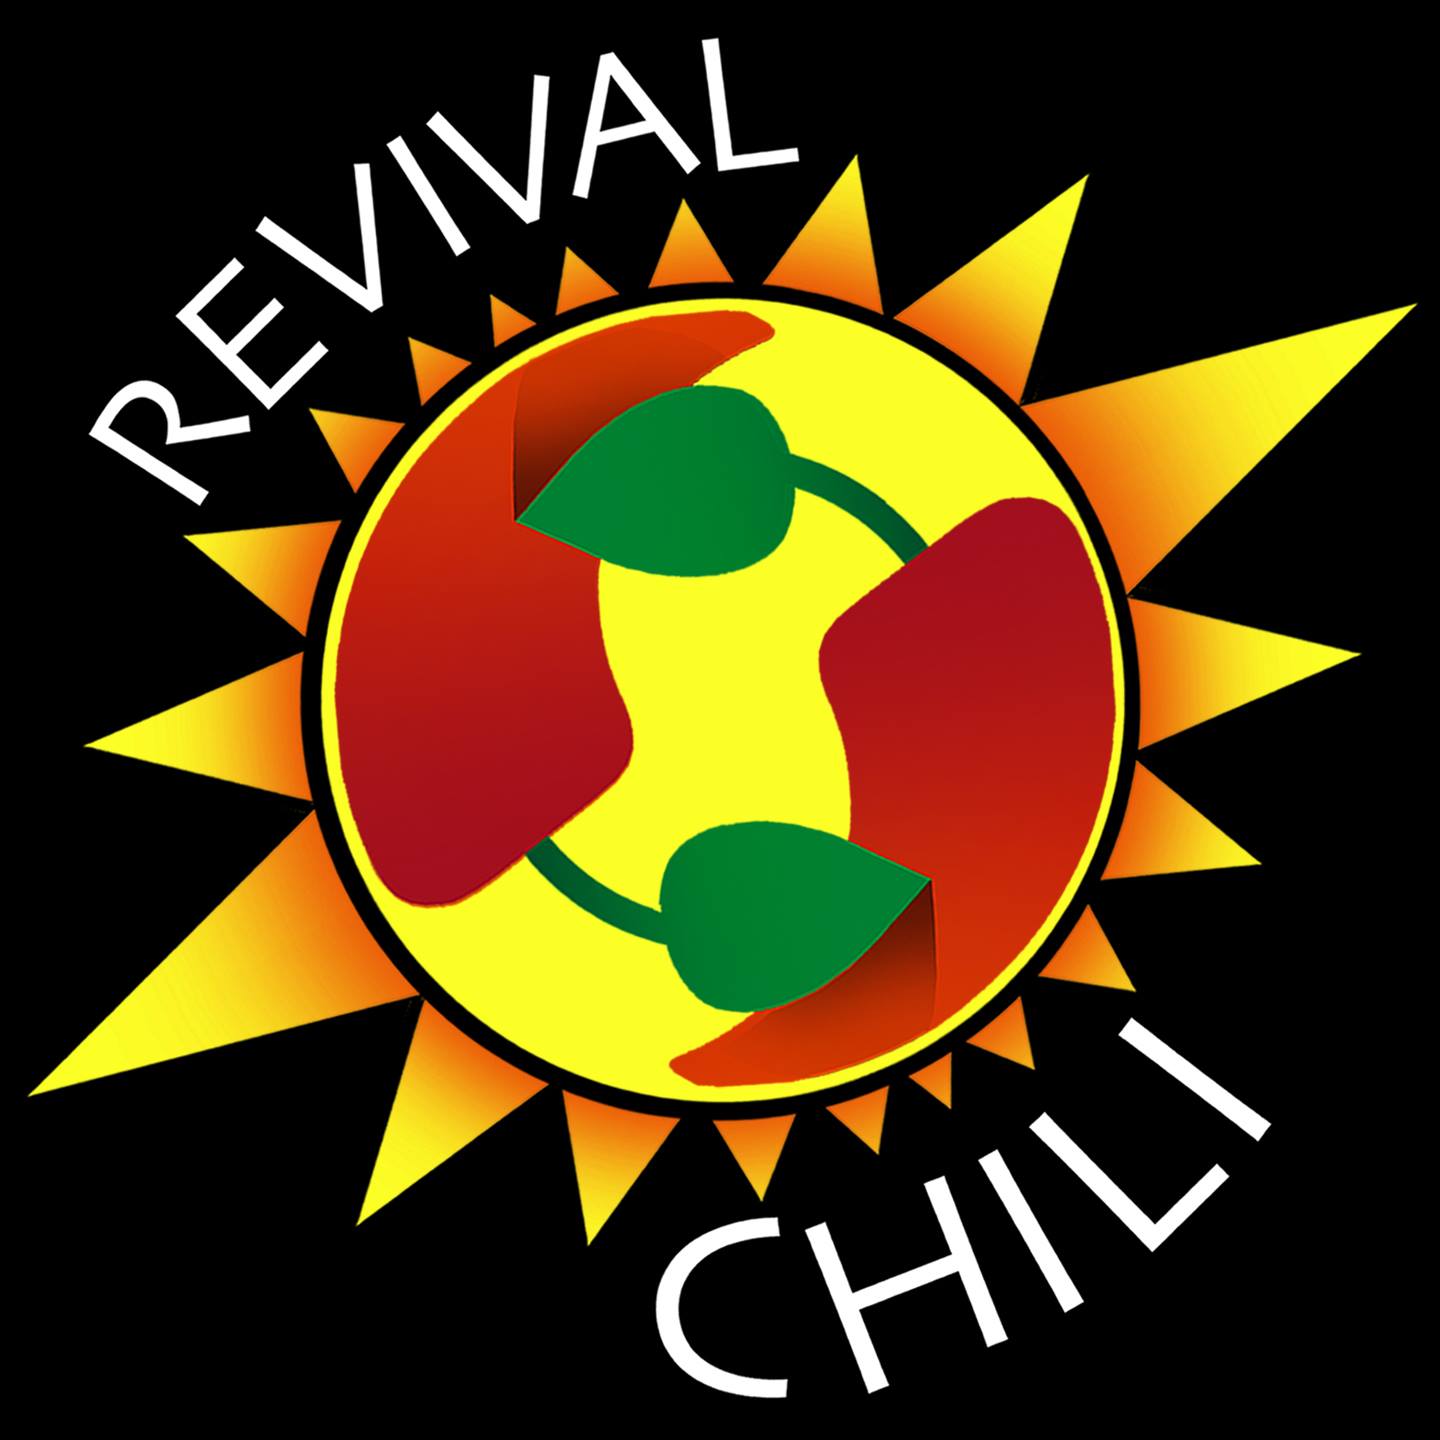 Revival Chili